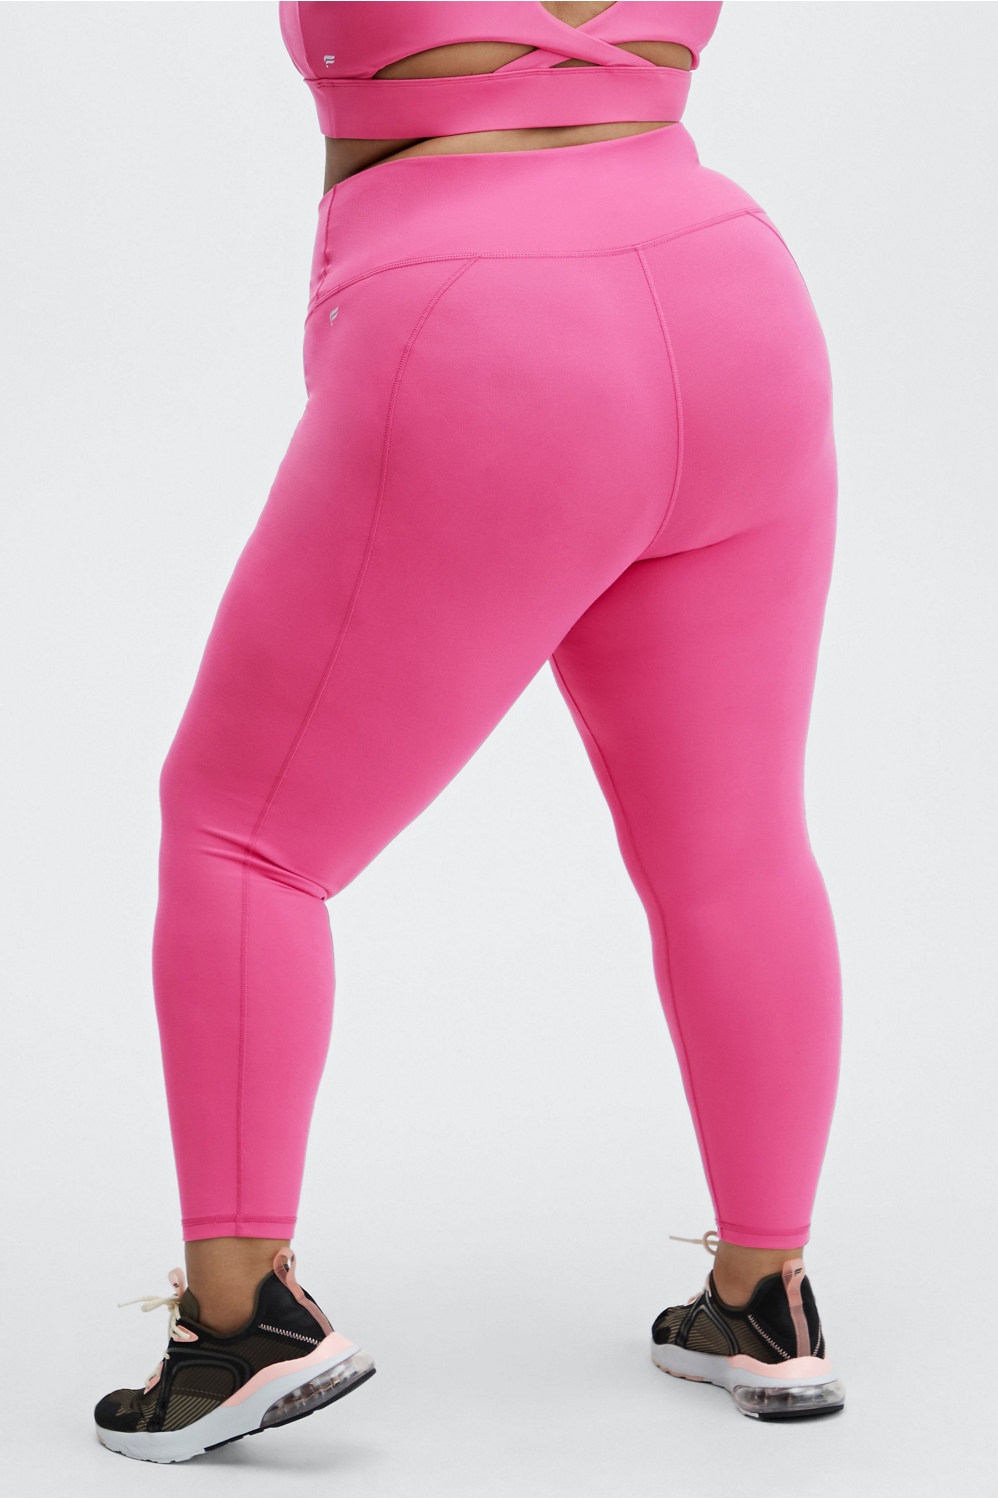 Fabletics High Waisted Powerhold Black and Pink Yoga Leggings - $32 - From  Natasha